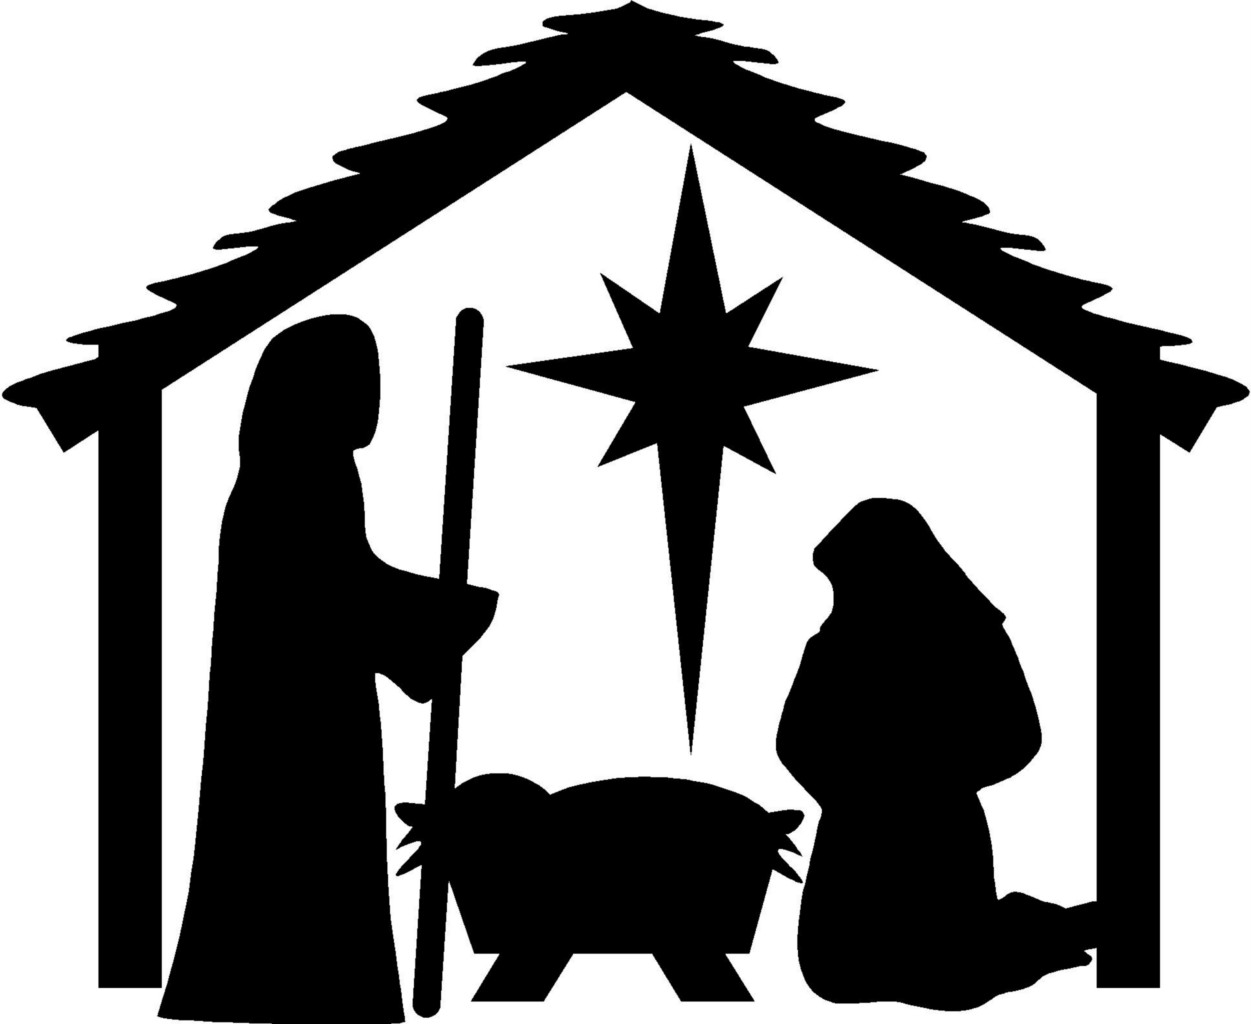 10 Nativity Silhouette Patter